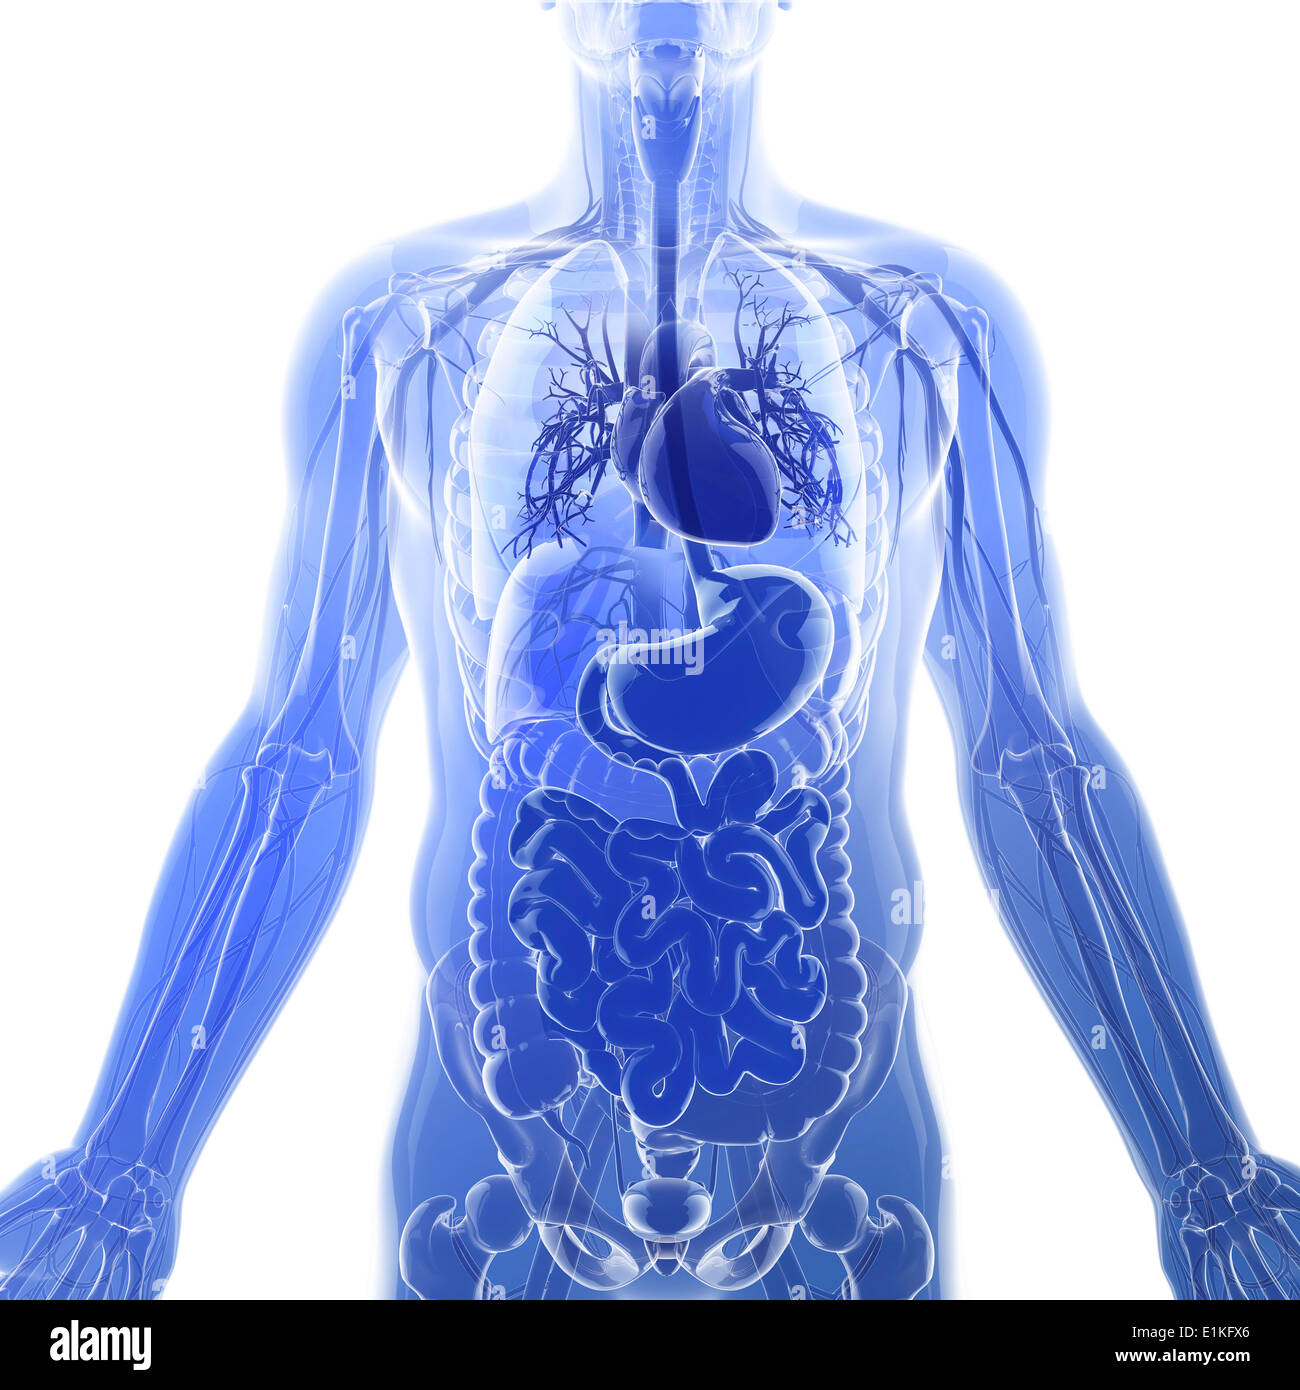 Human internal organs computer artwork Stock Photo - Alamy